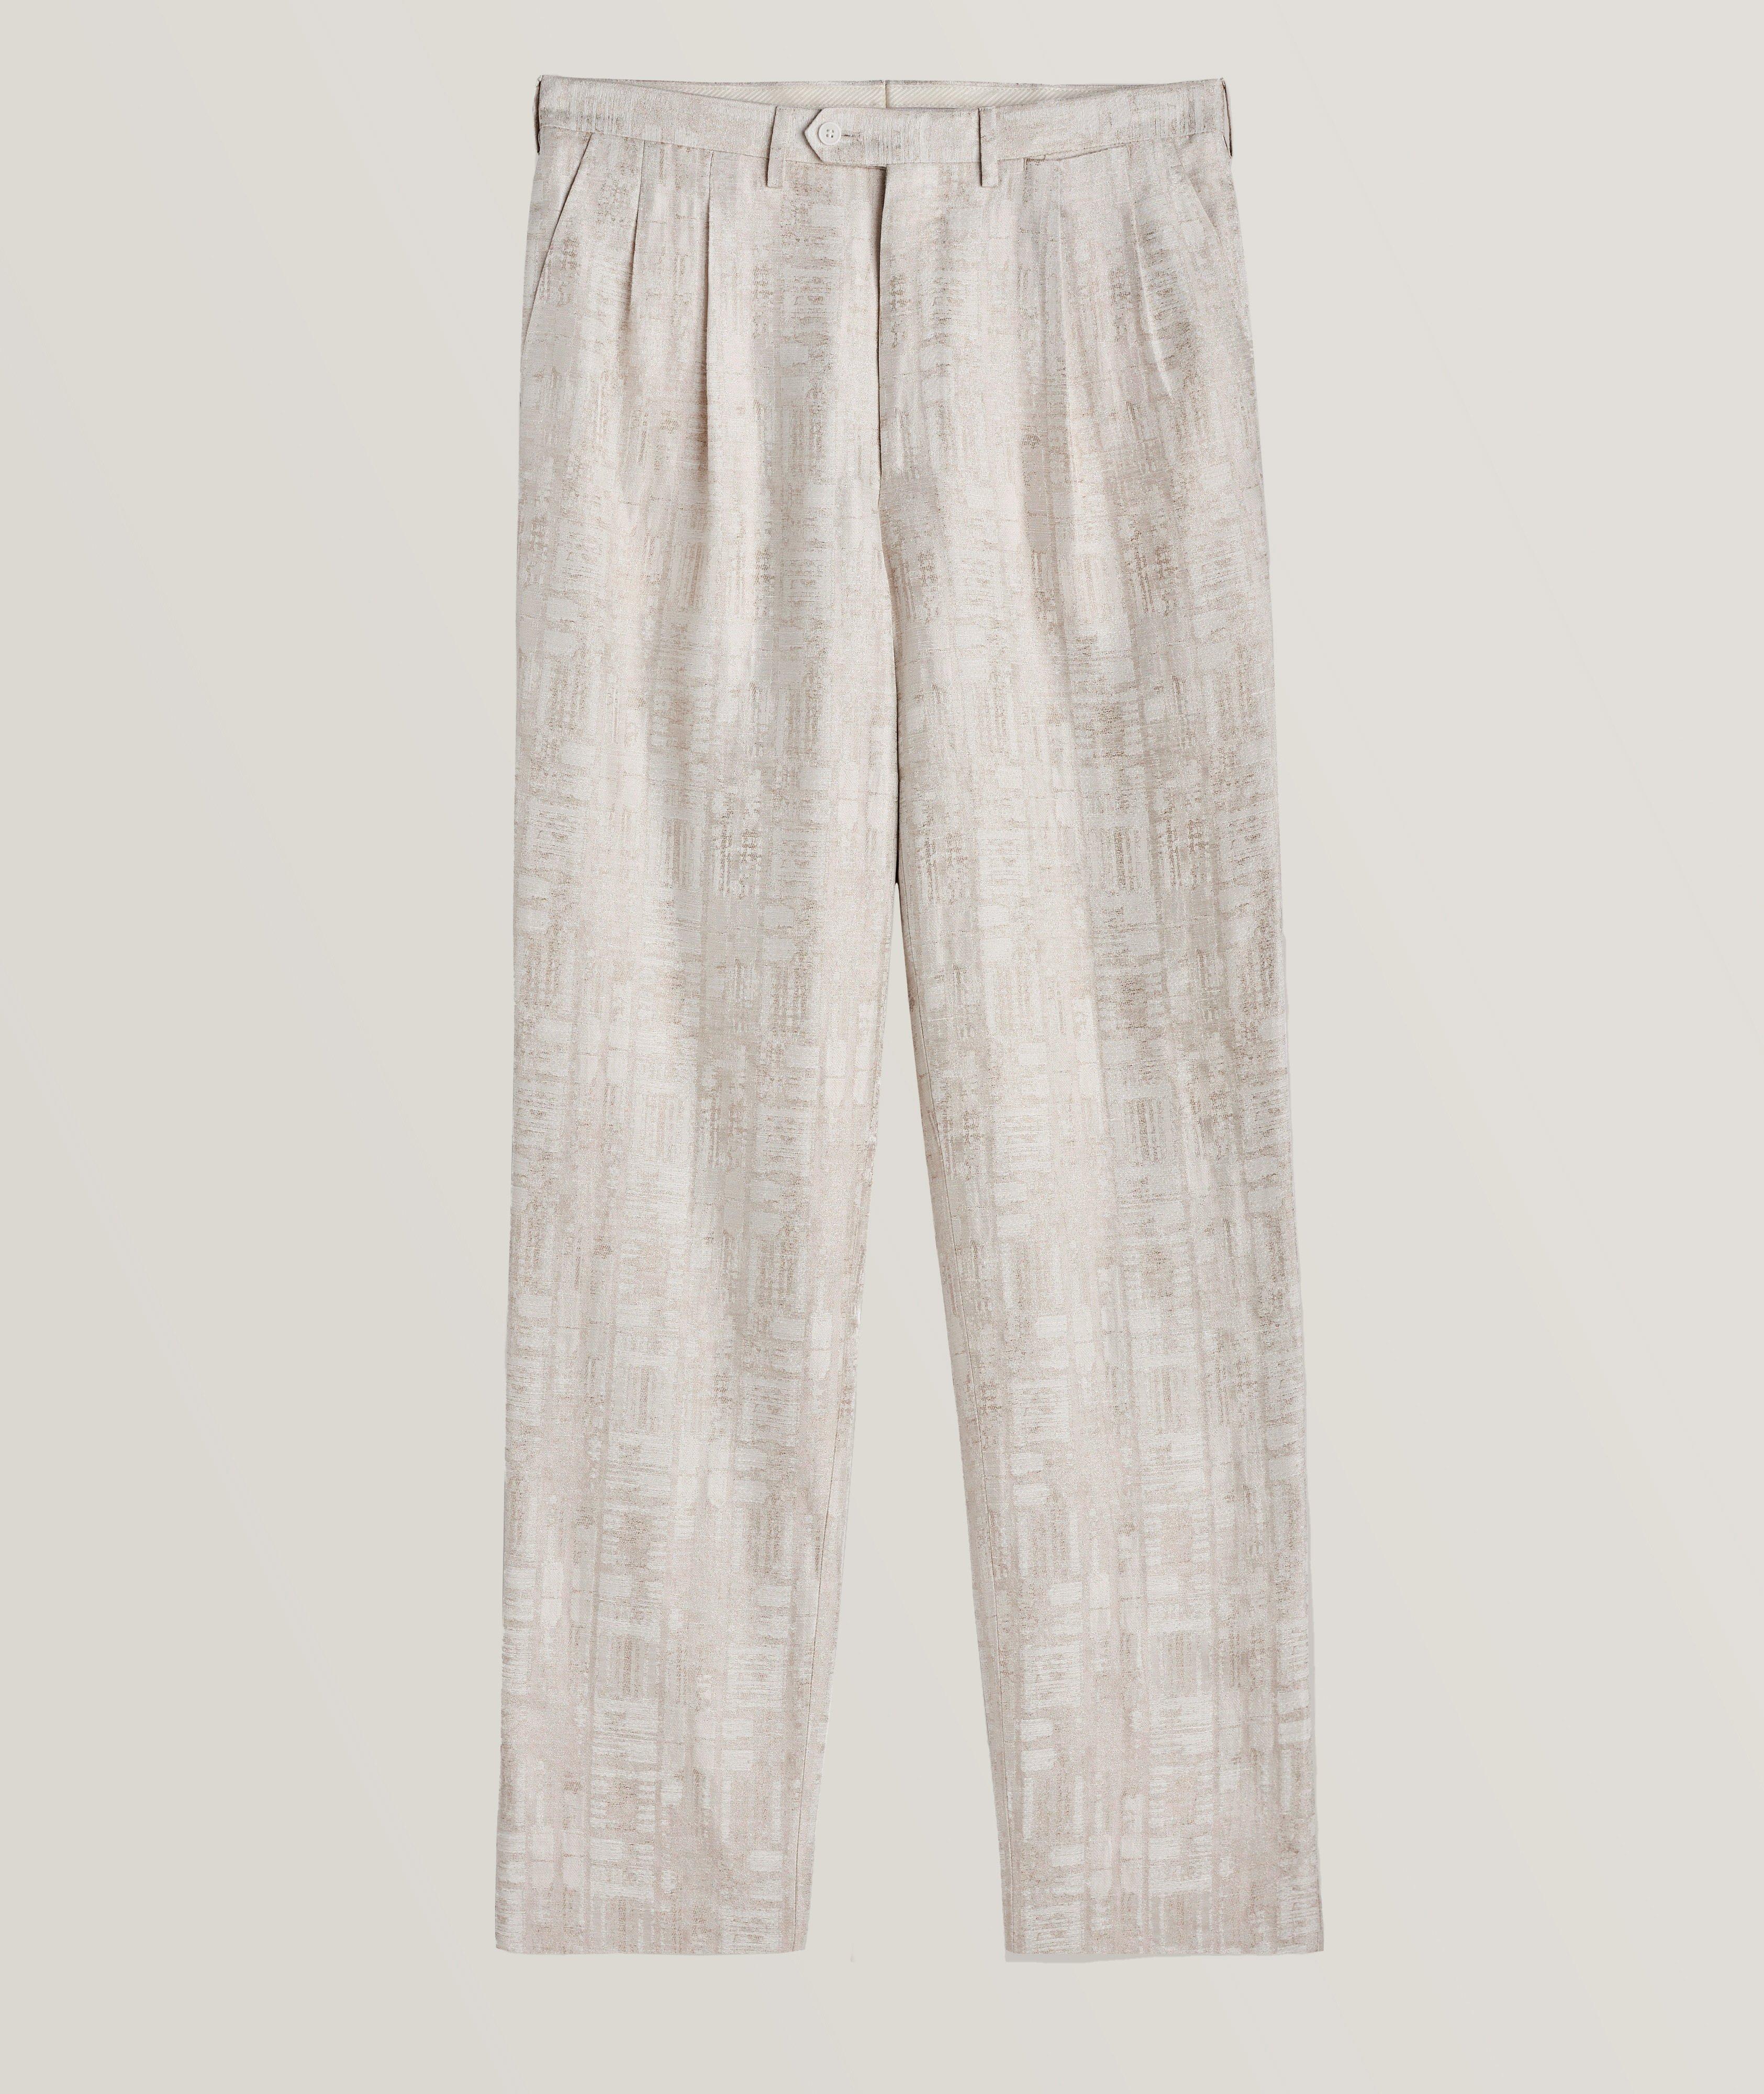 Giorgio Armani Jacquard Weave Technical-Blend Dress Pants